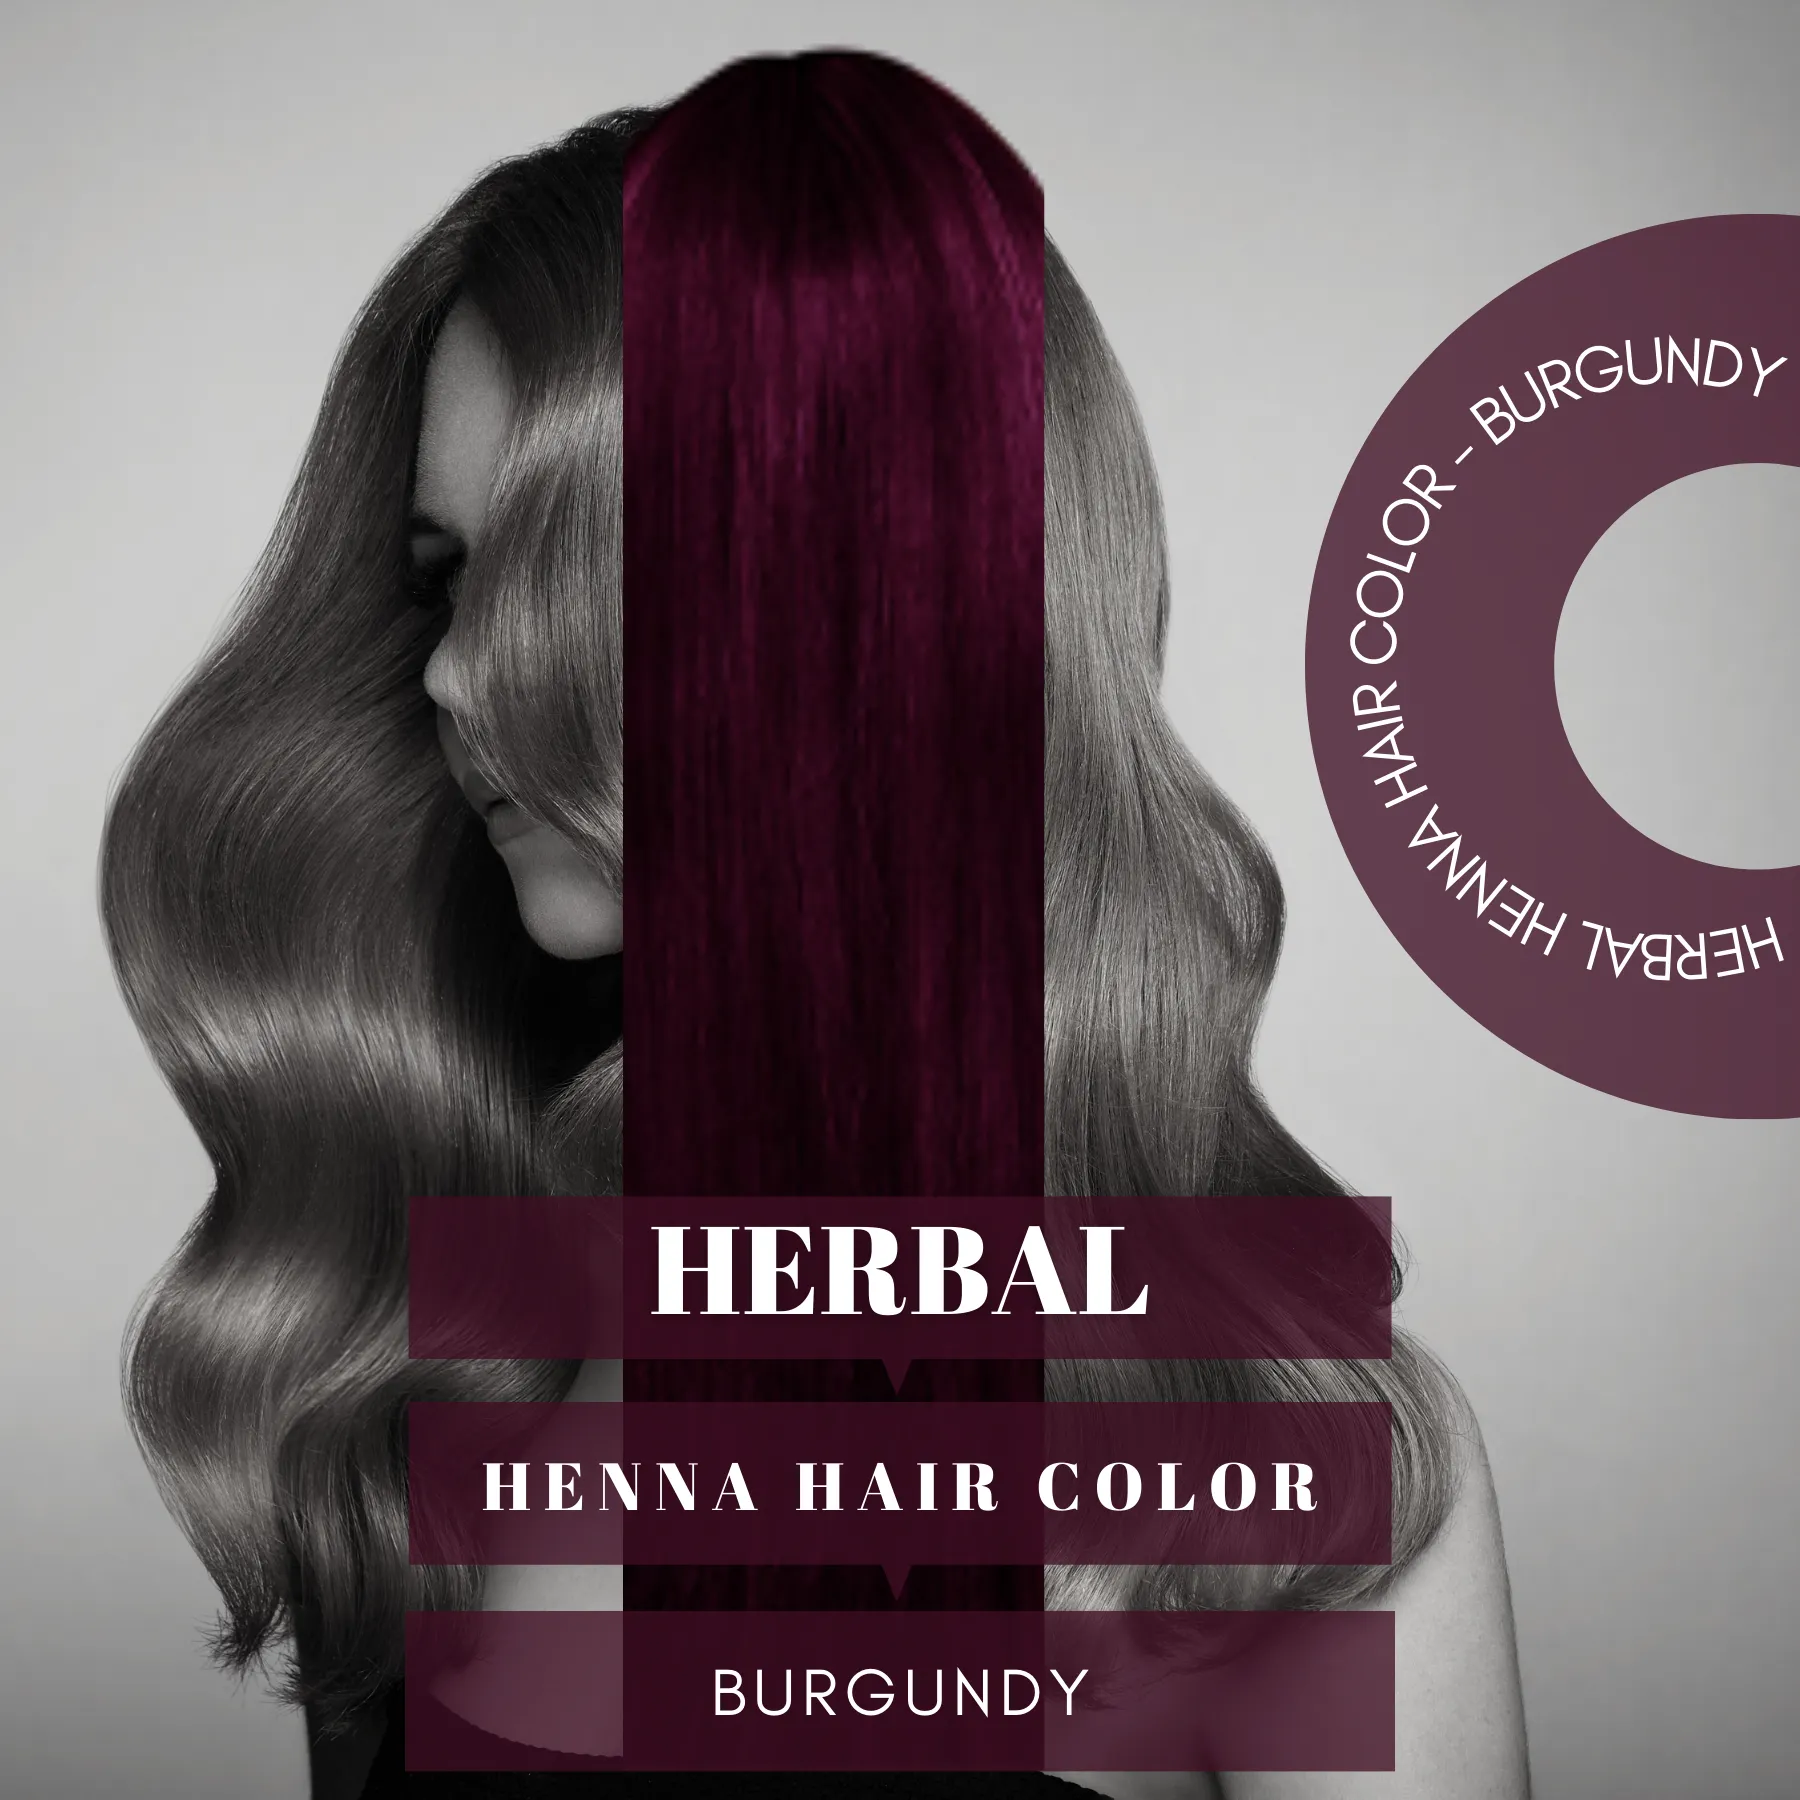 HERBAL HENNA HAIR COLOR - BURGUNDY . www.dkihenna.com